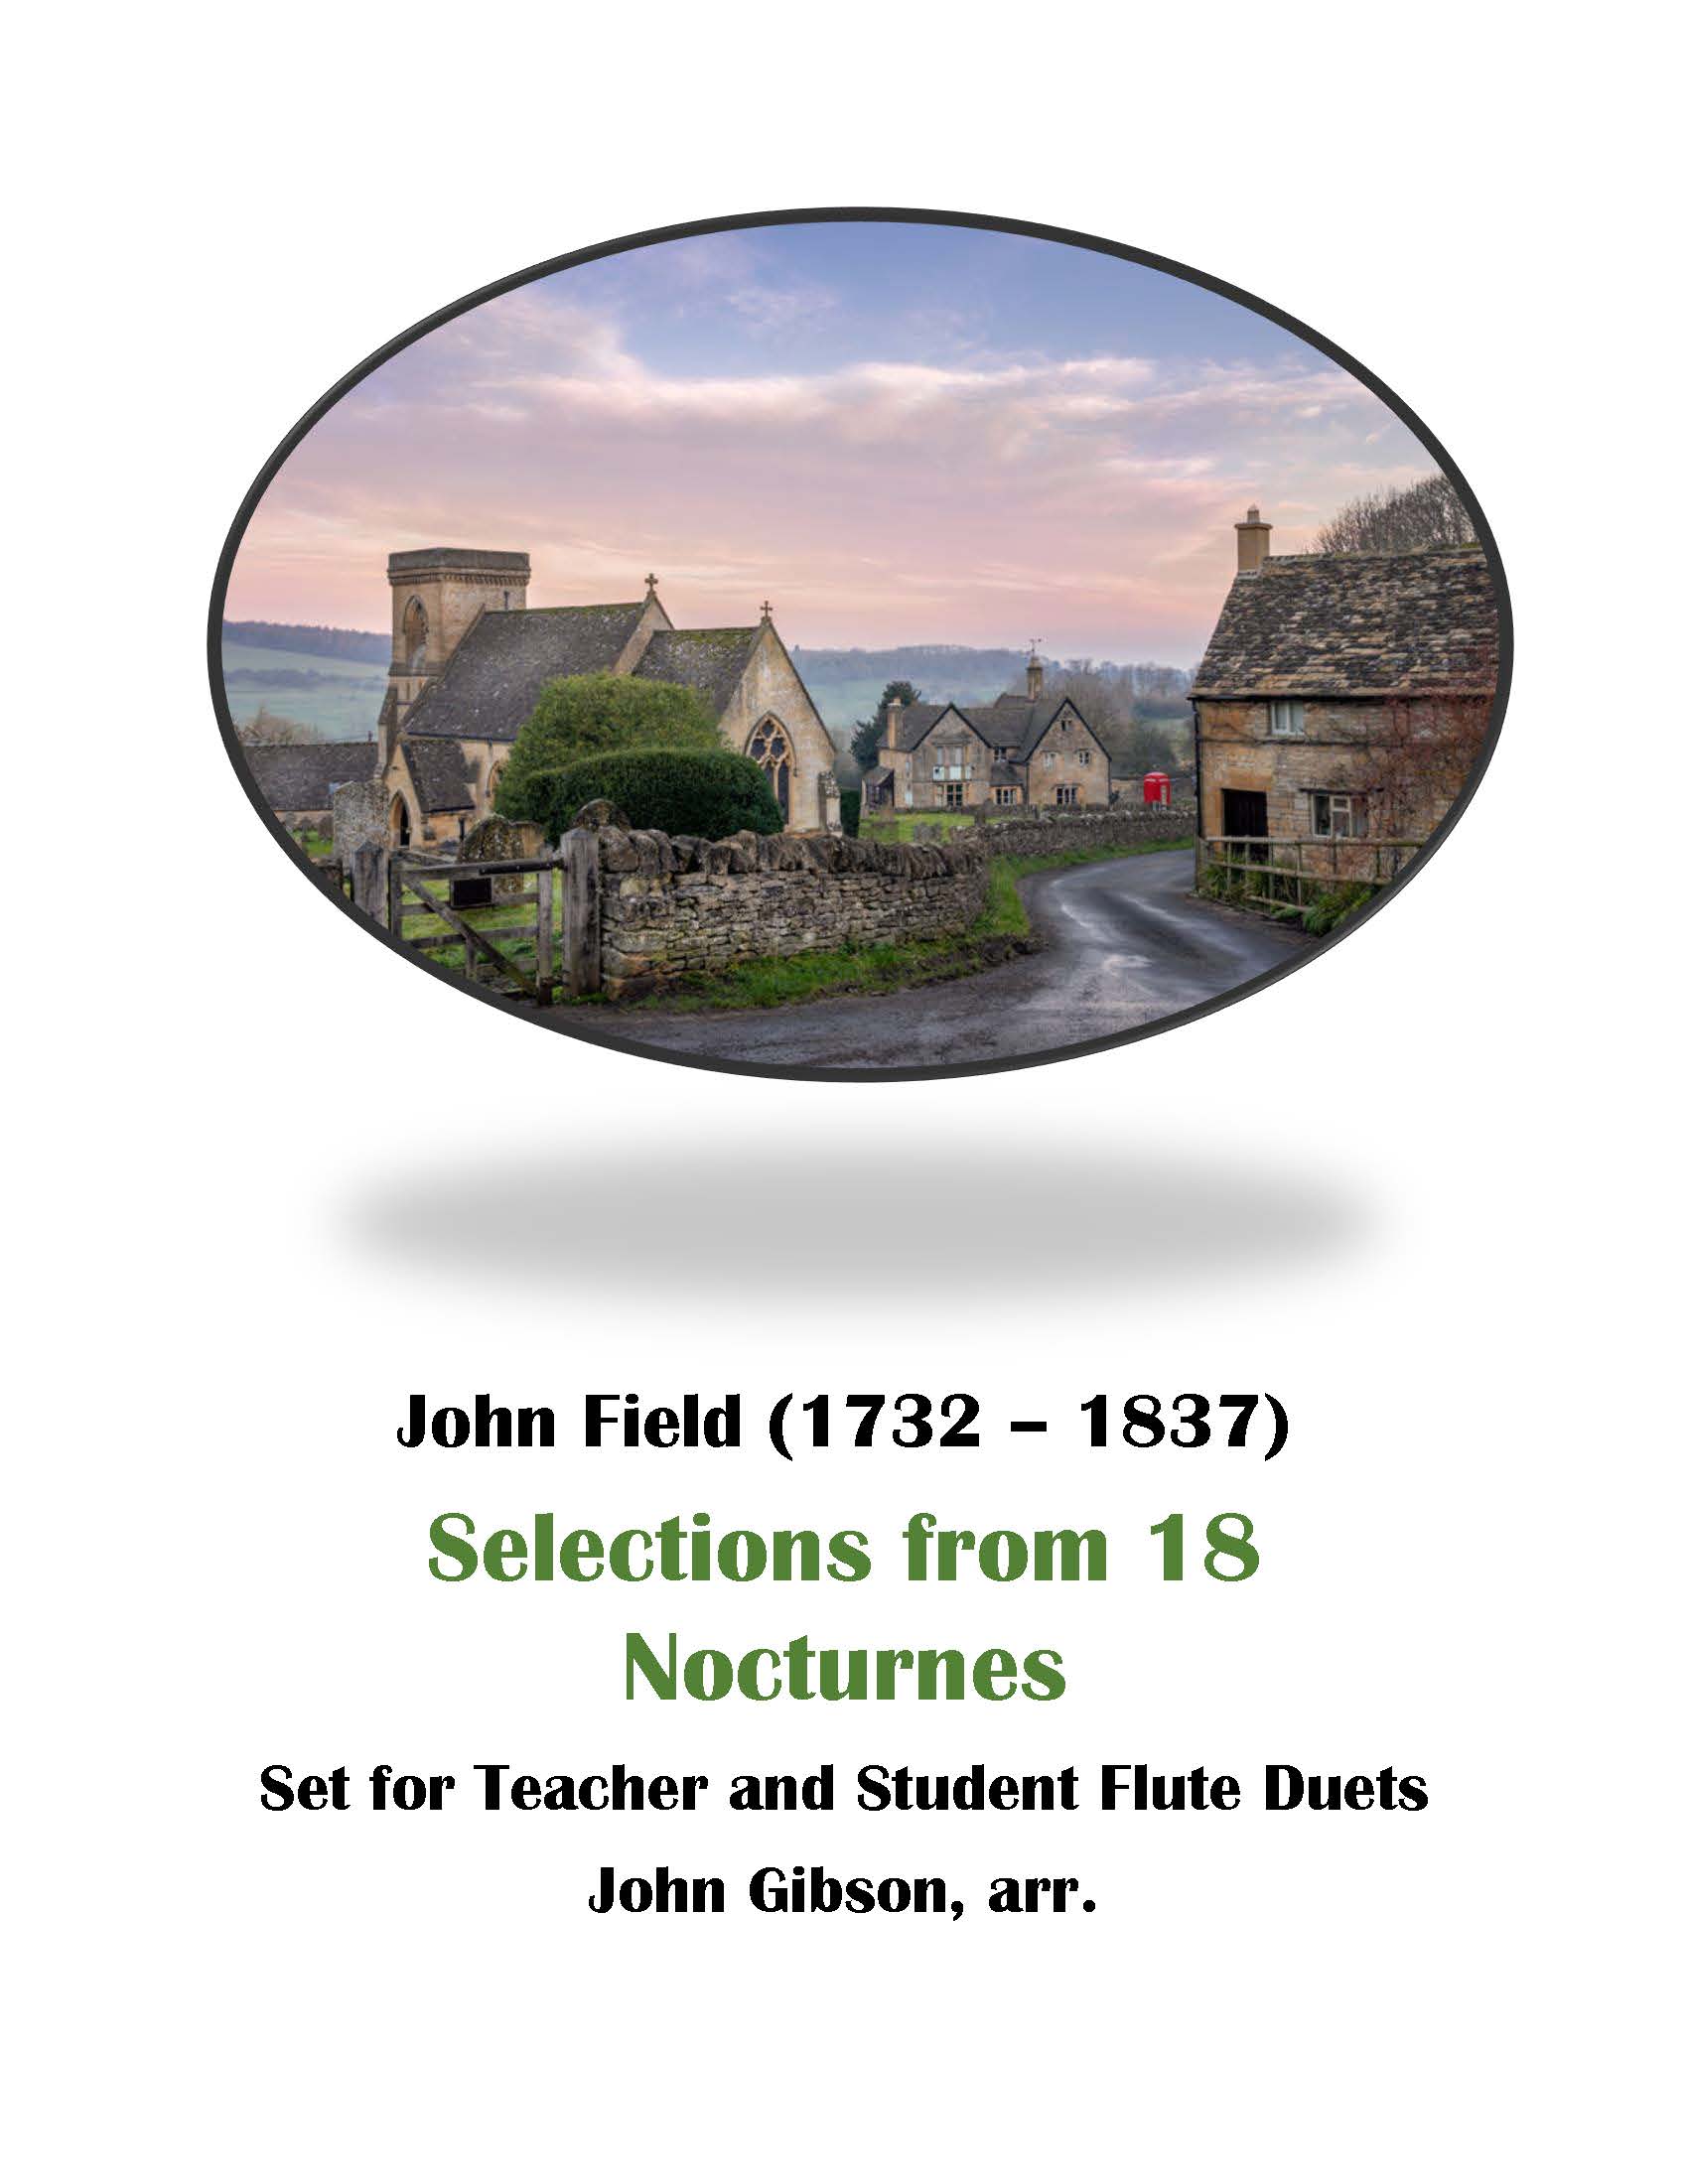 teacher and student duets John Field fl2 cover